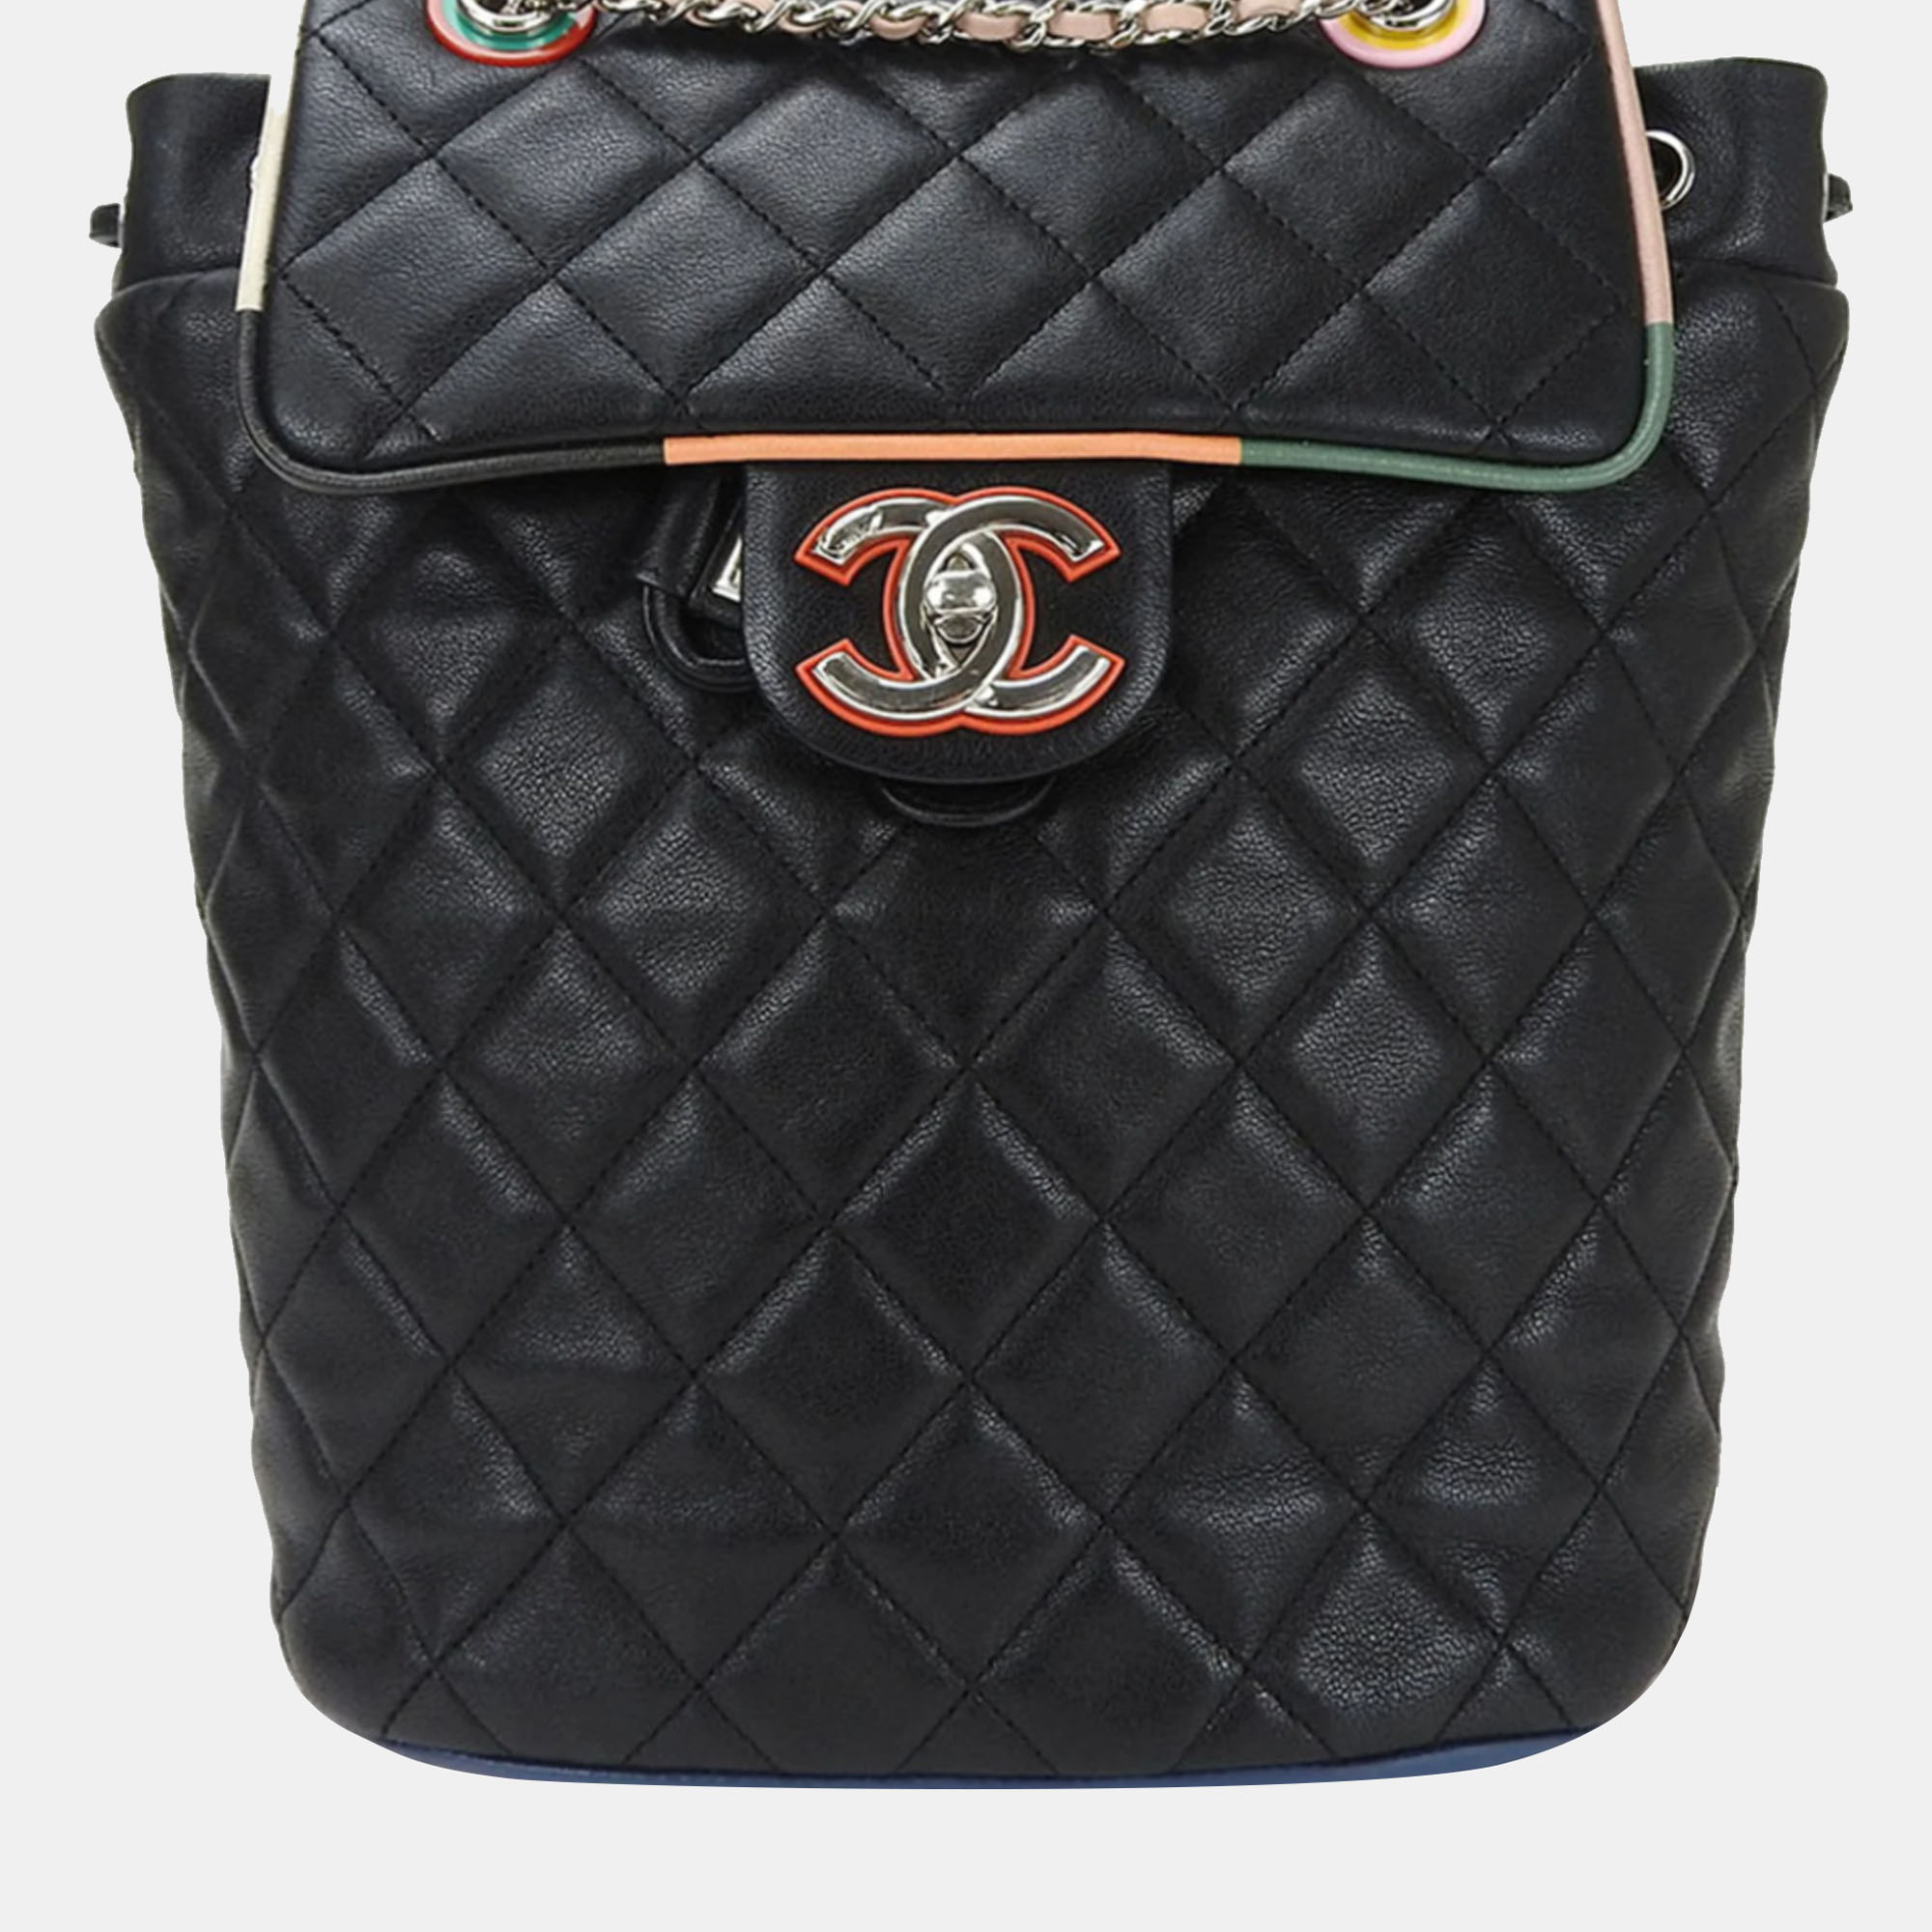 Chanel black lambskin quilted cuba urban spirit backpack